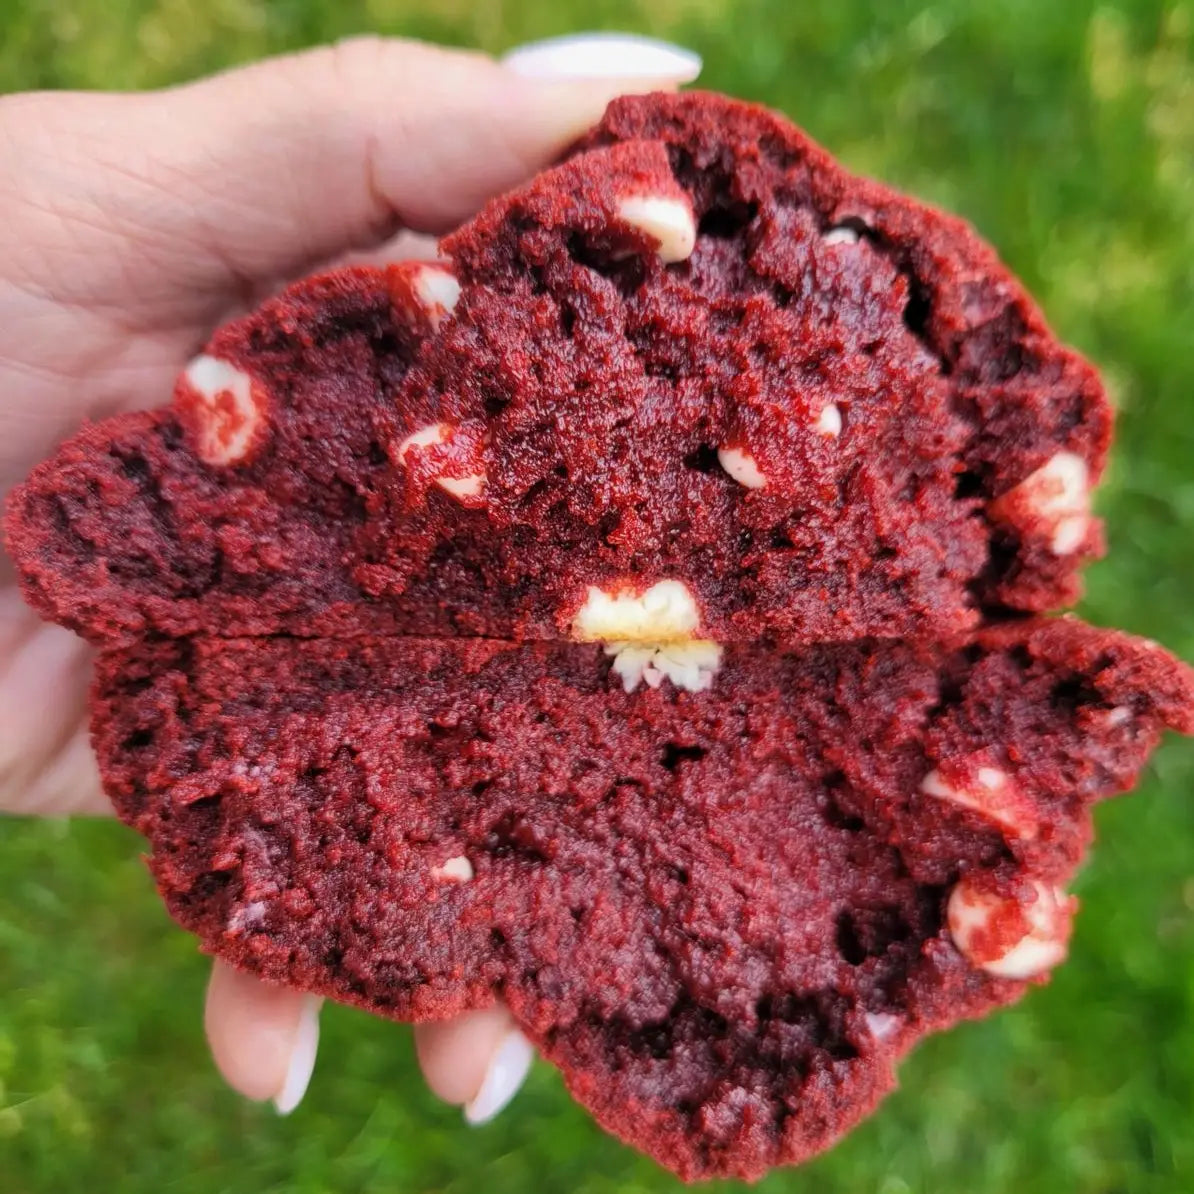 MBFC Giant Red Velvet Cookie